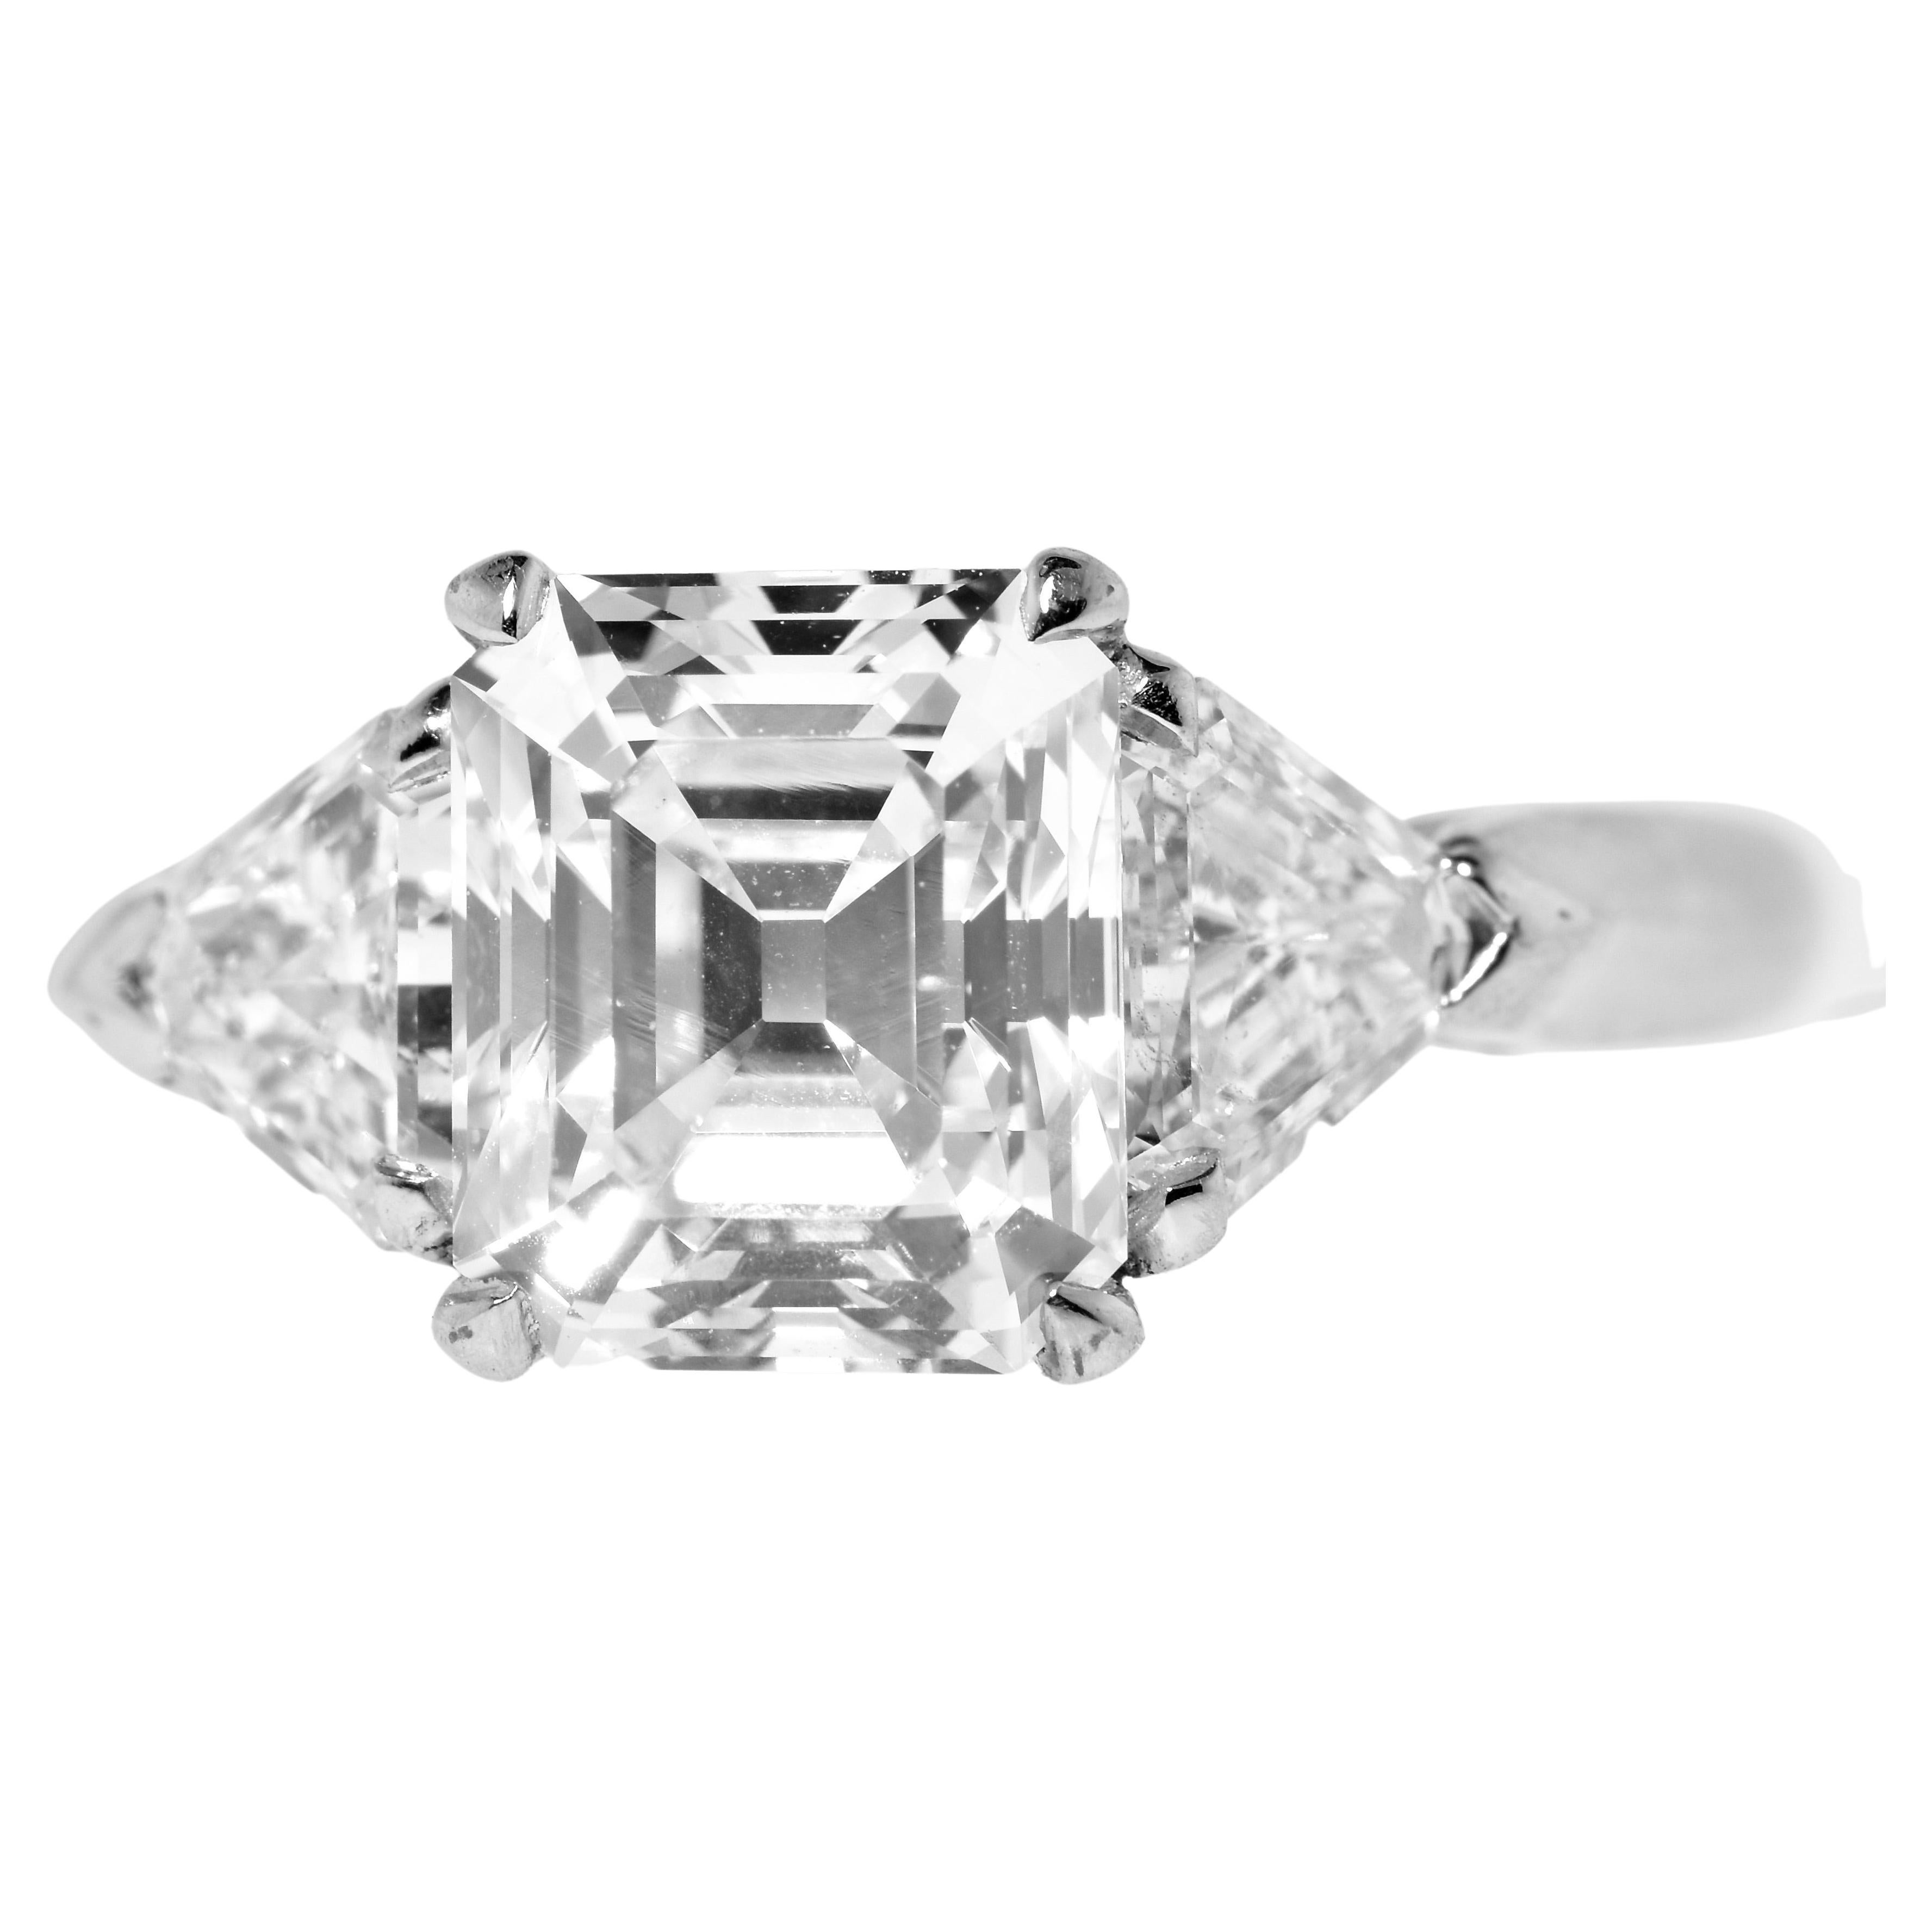 GIA Graded D, SI1, Vintage Platinum Asscher Cut 2.23 Carat Diamond Ring